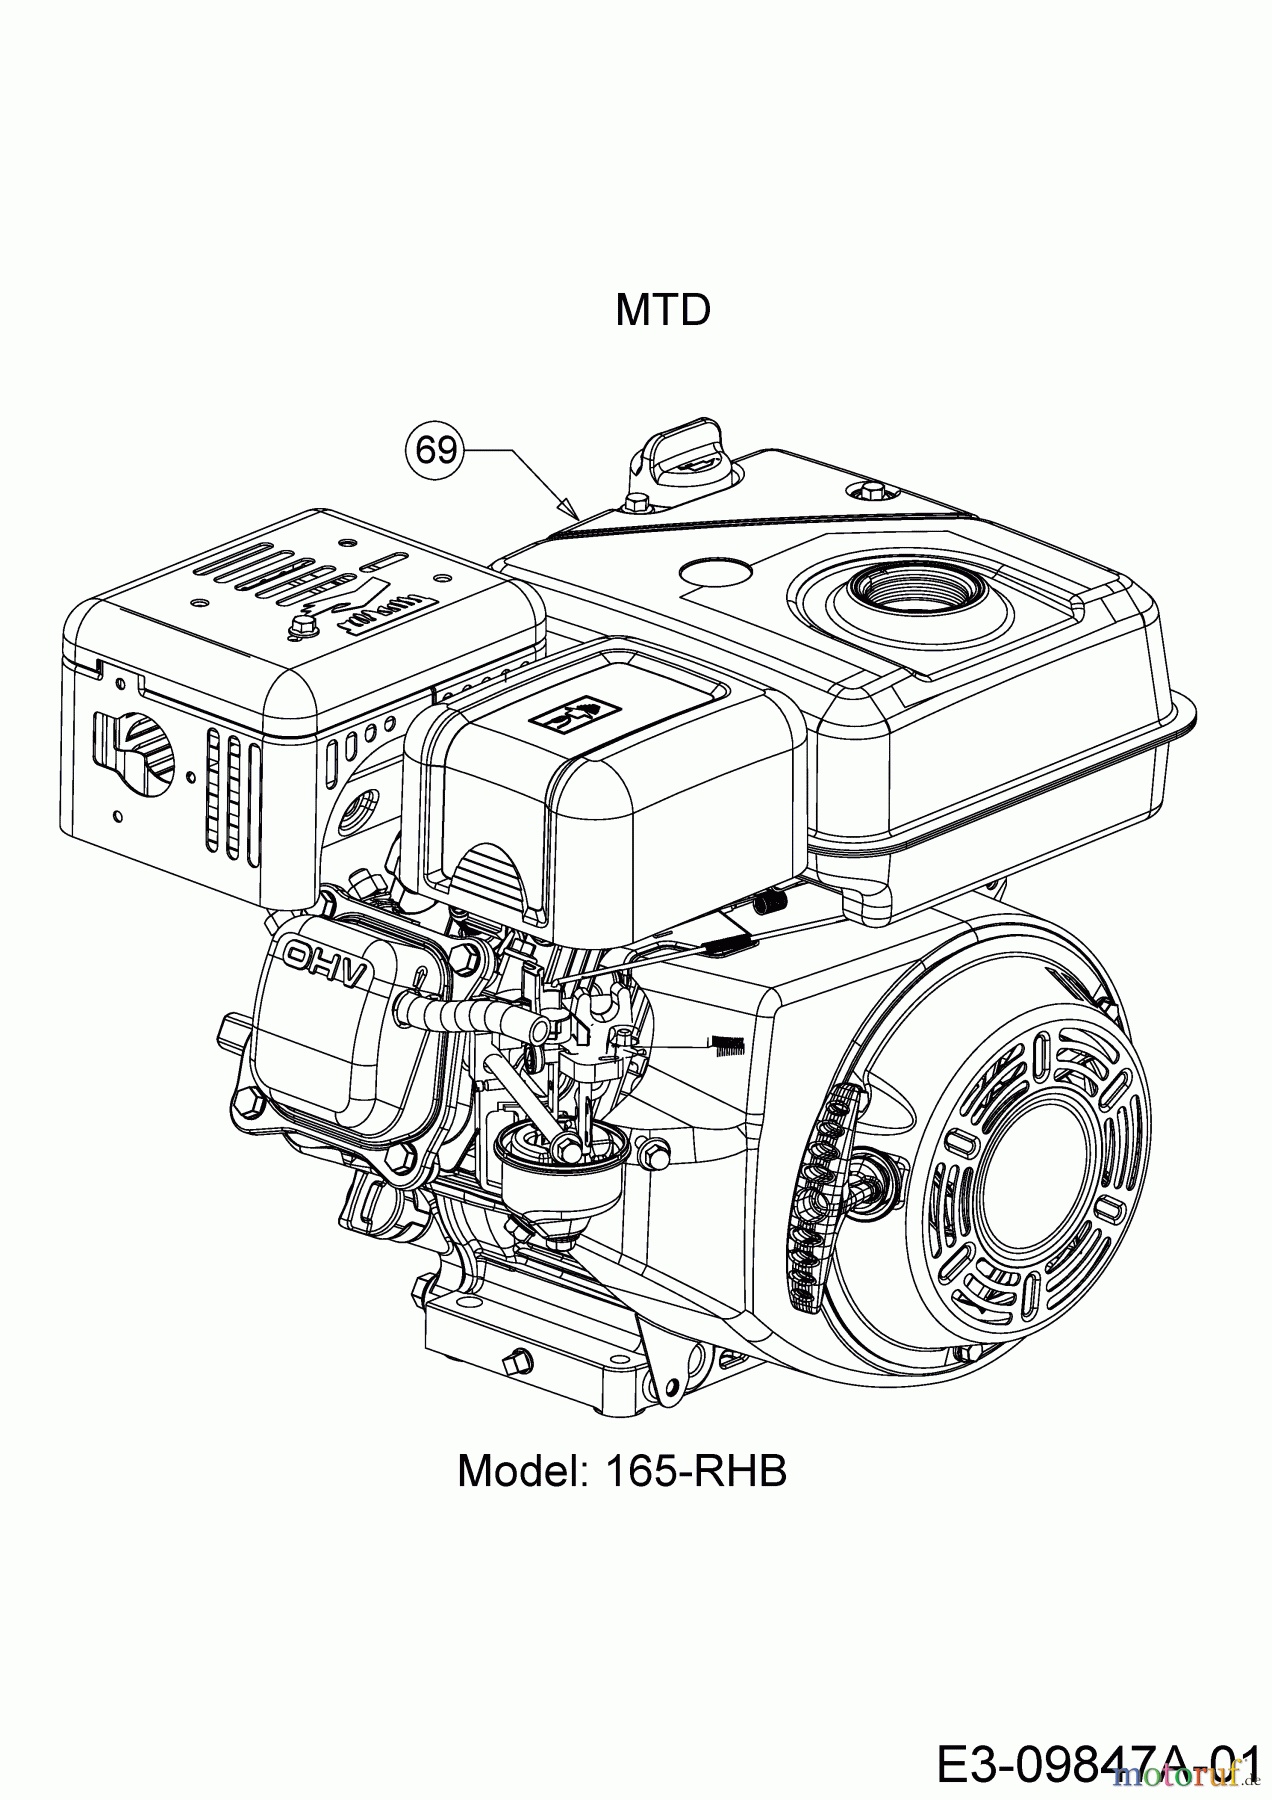  MTD Tillers T/380 M 21D-38MT678 (2019) Engine MTD